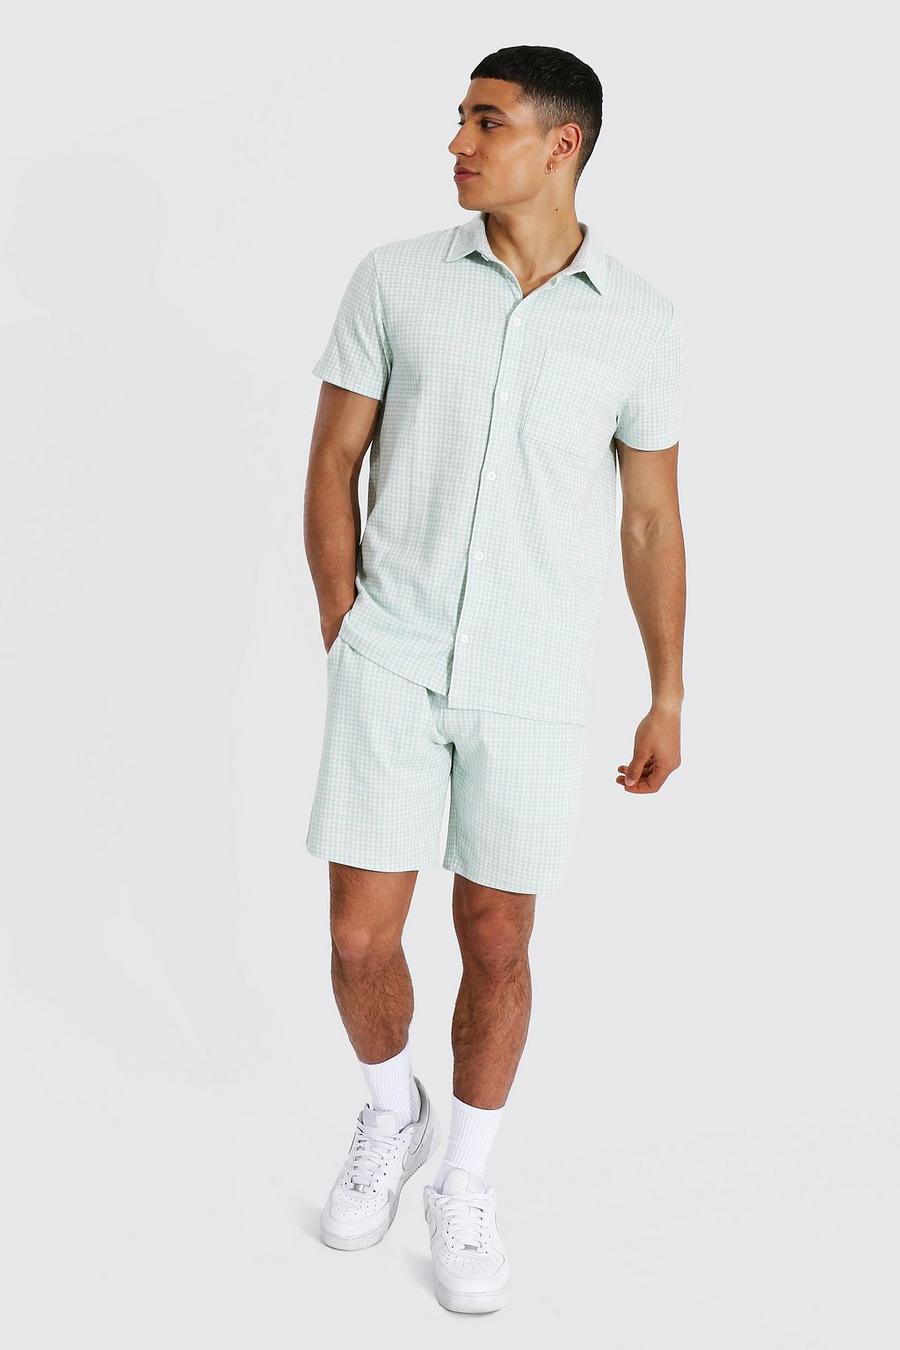 Mint Short Sleeve Check Jacquard Shirt And Shorts image number 1